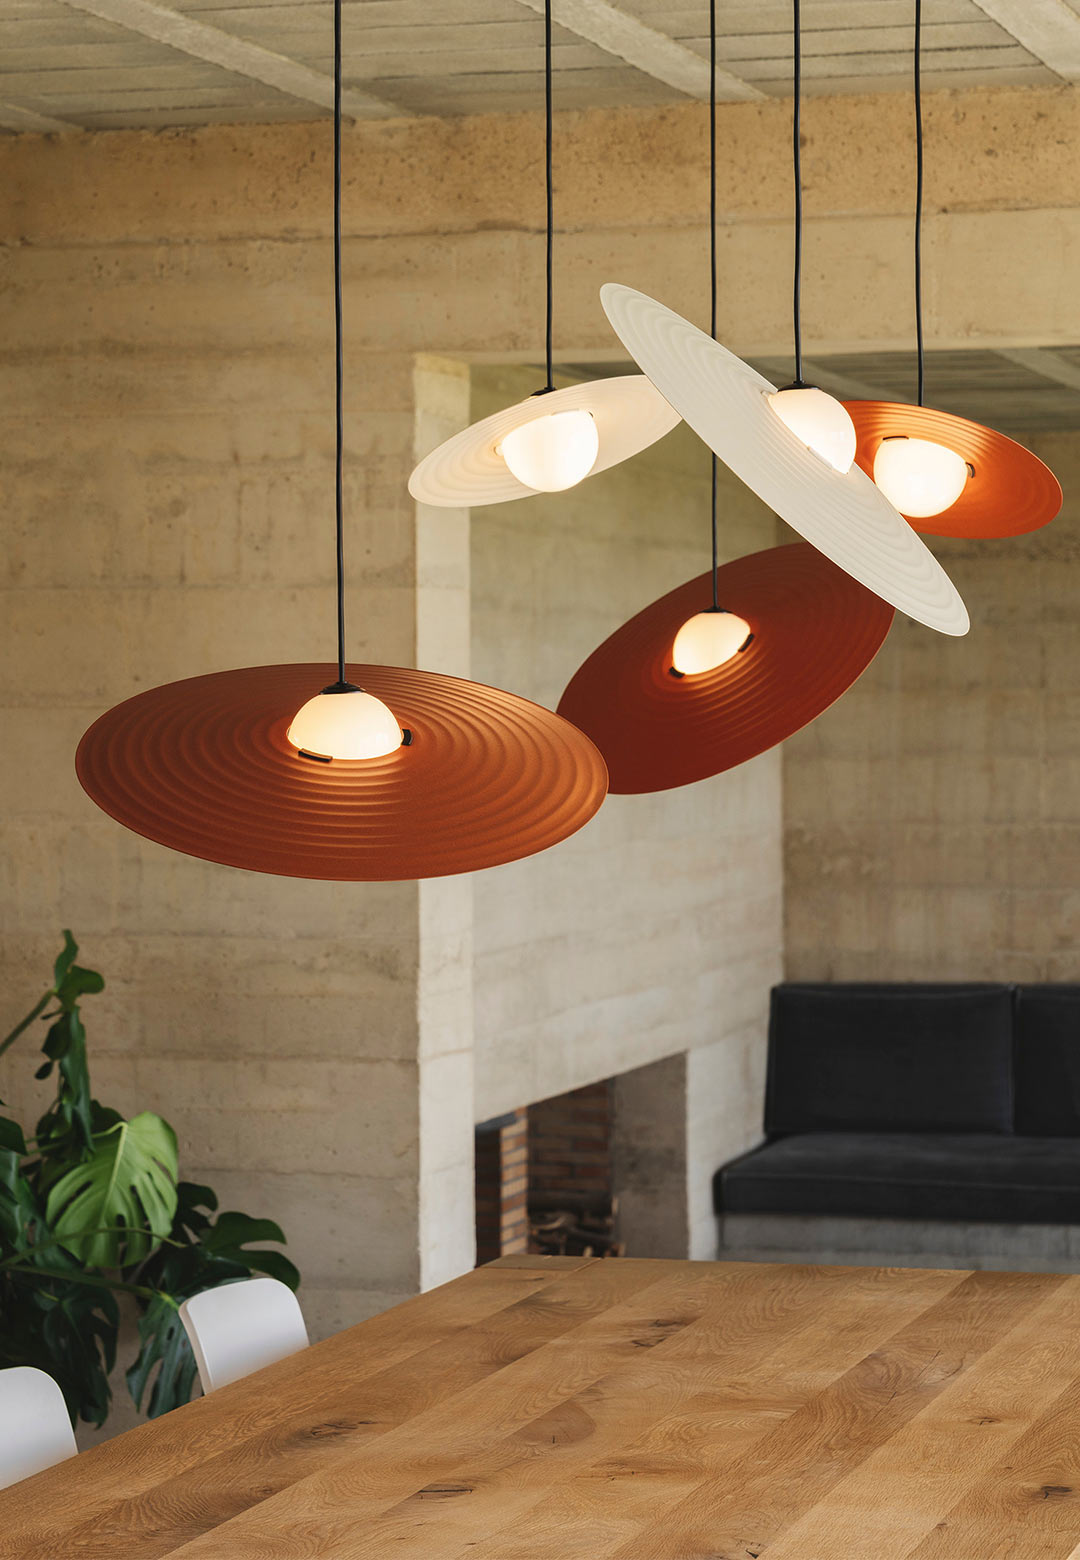 Milan Iluminción and Jordi Pla conceive a ‘Symphony’ of sleek lighting designs